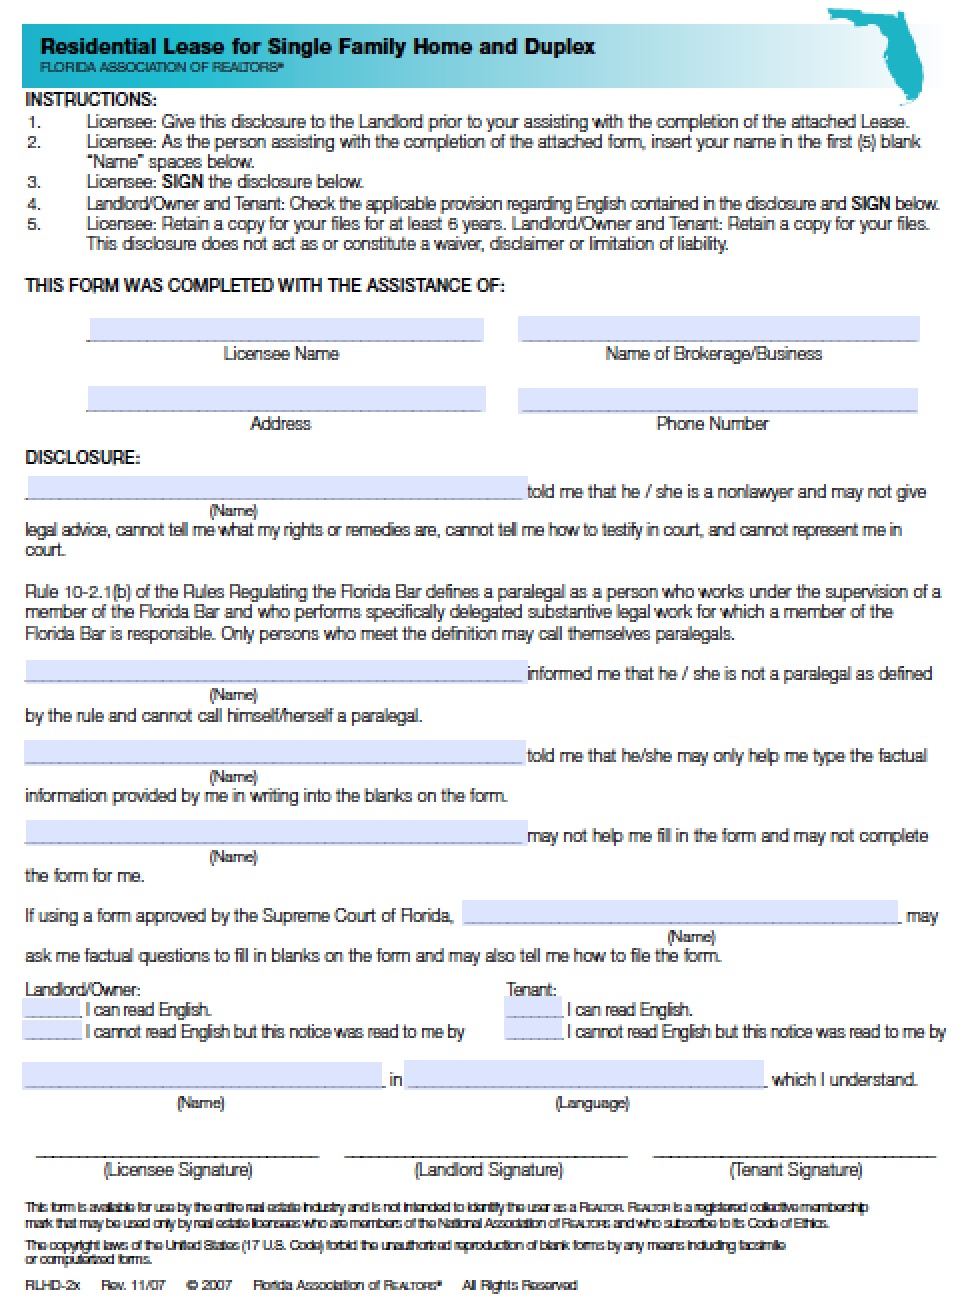 oregon rental agreement form 818a